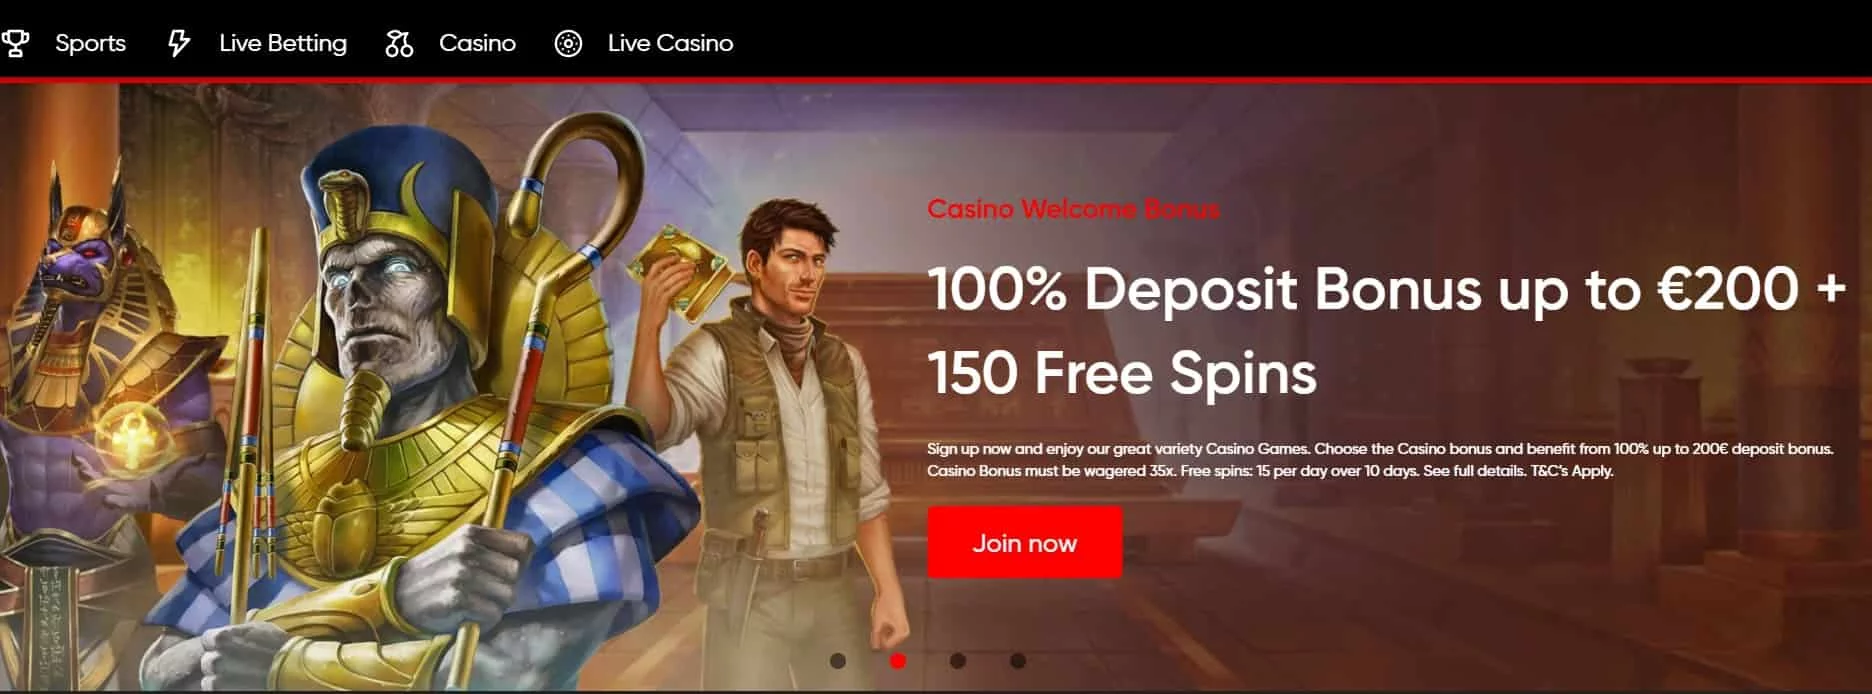 ibet casino welcome bonus-min